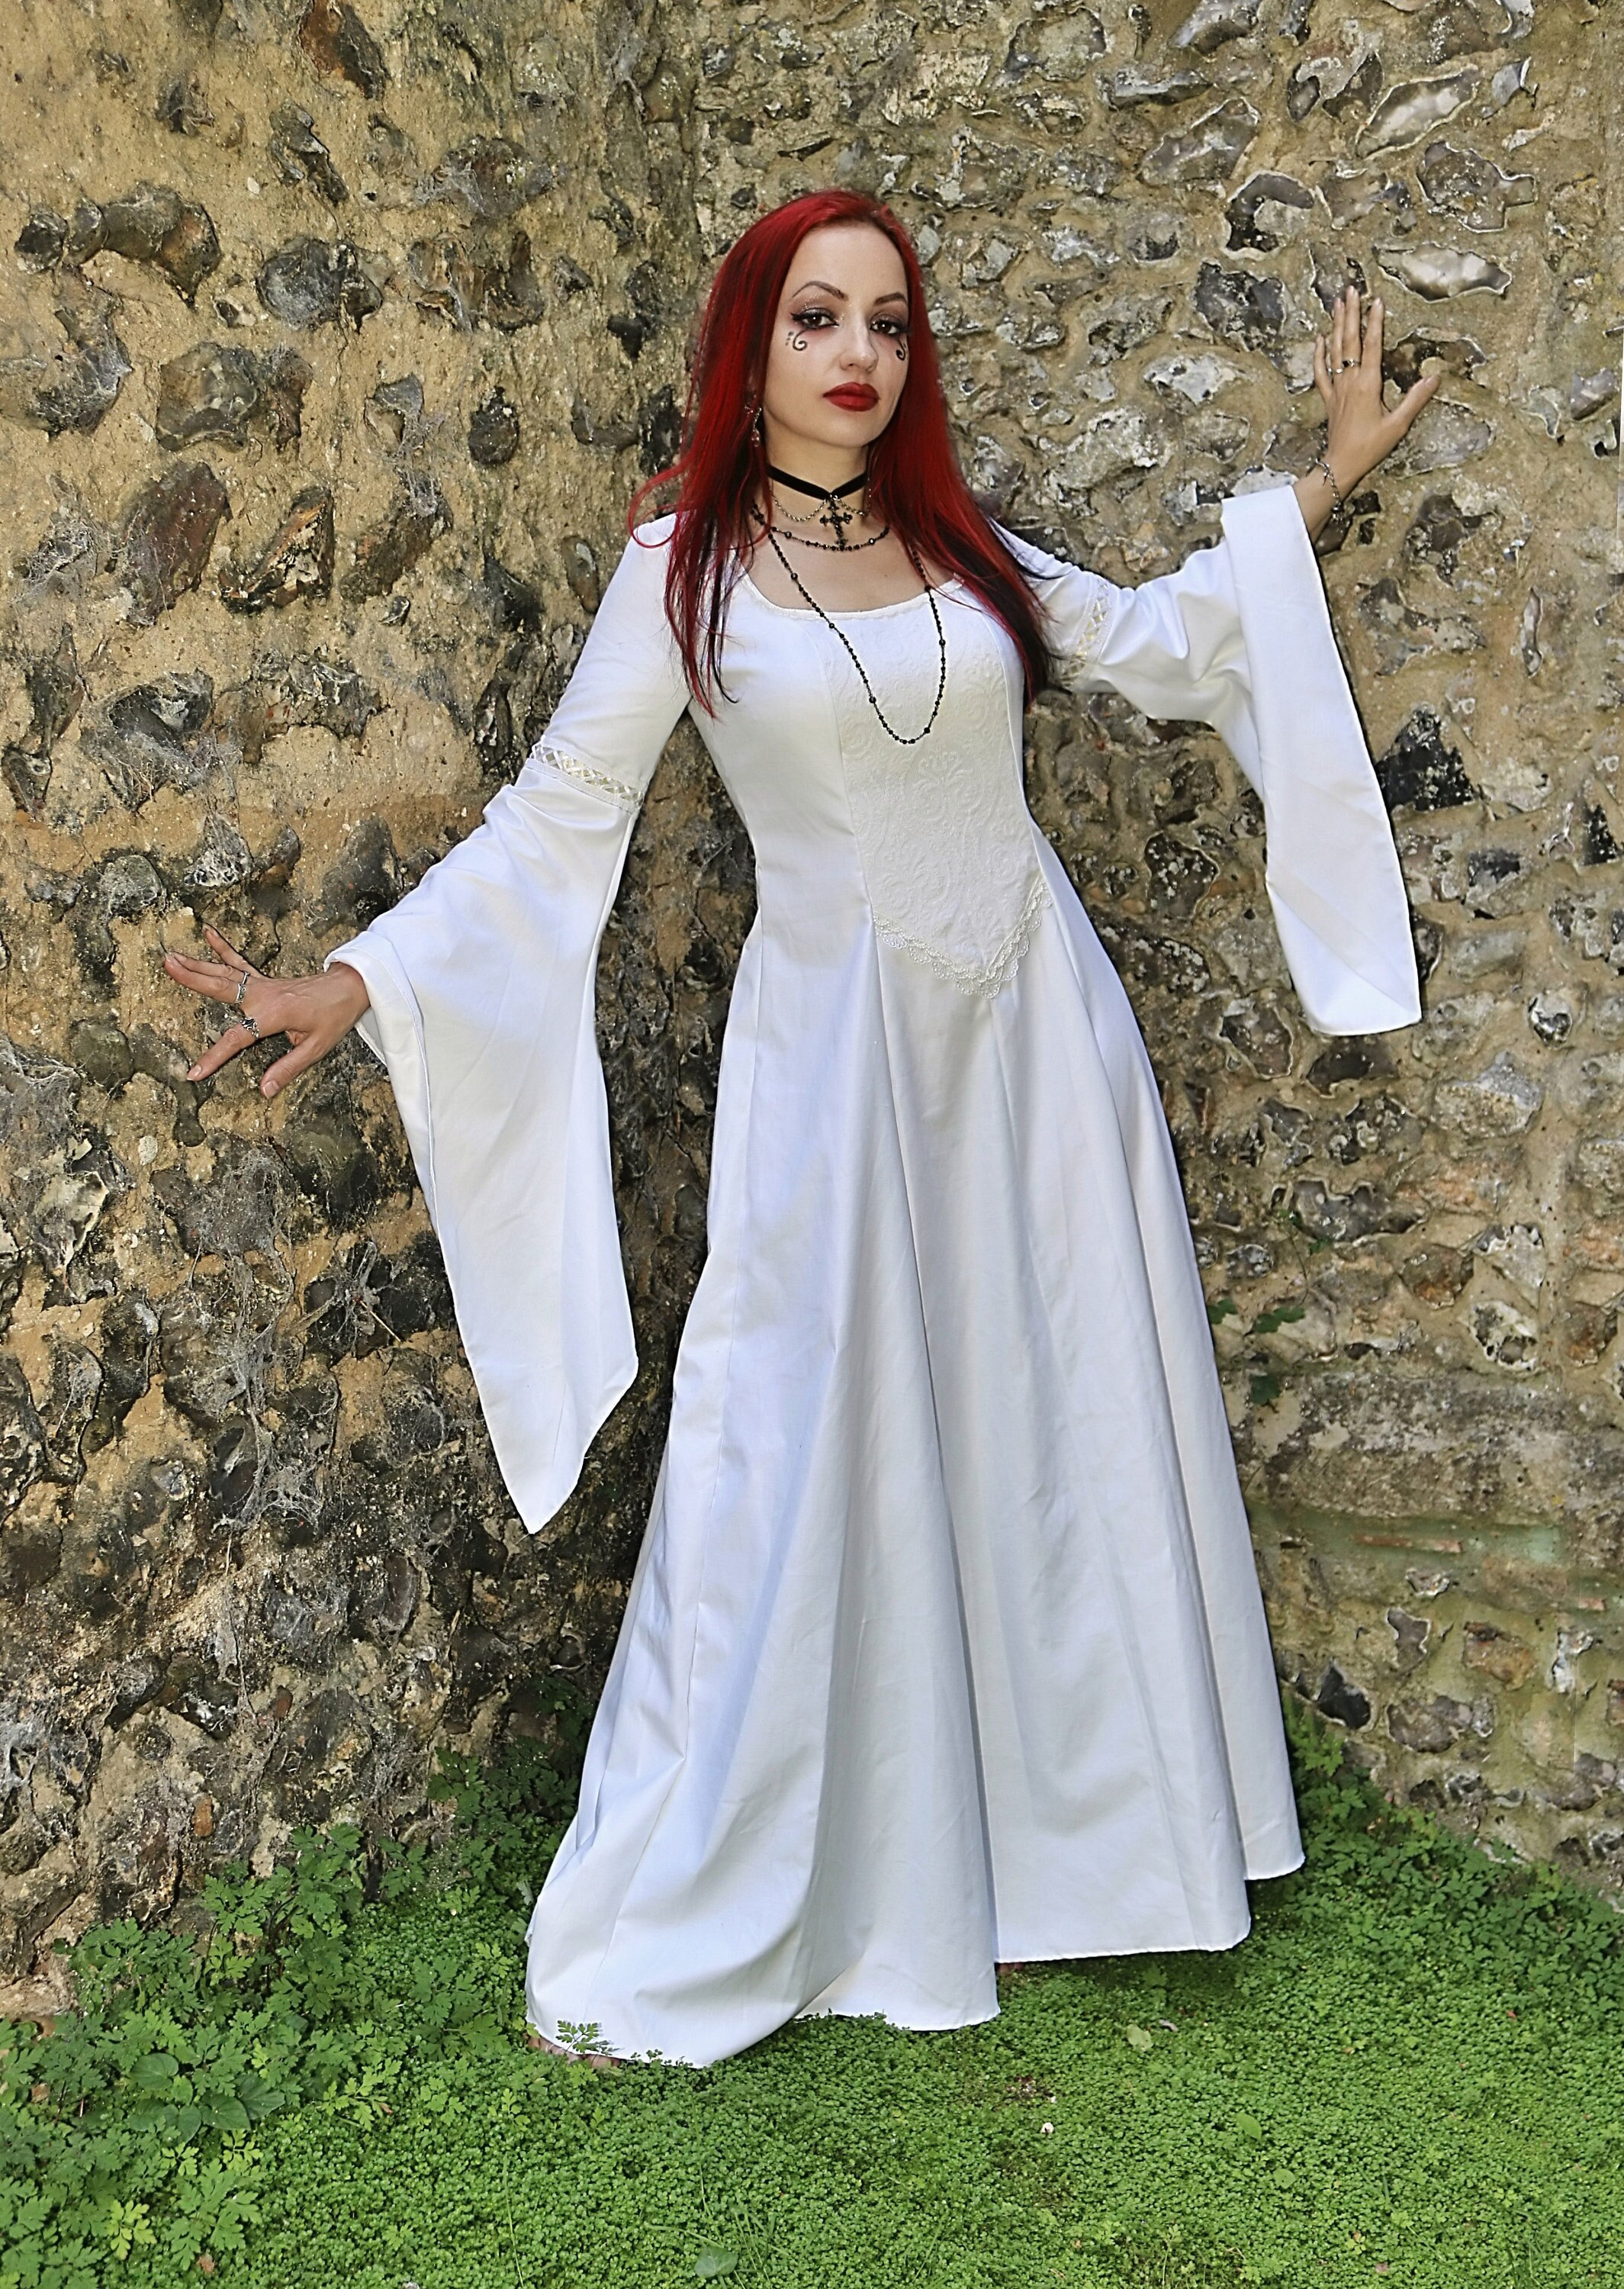 Renaissance Wedding Dress -  UK